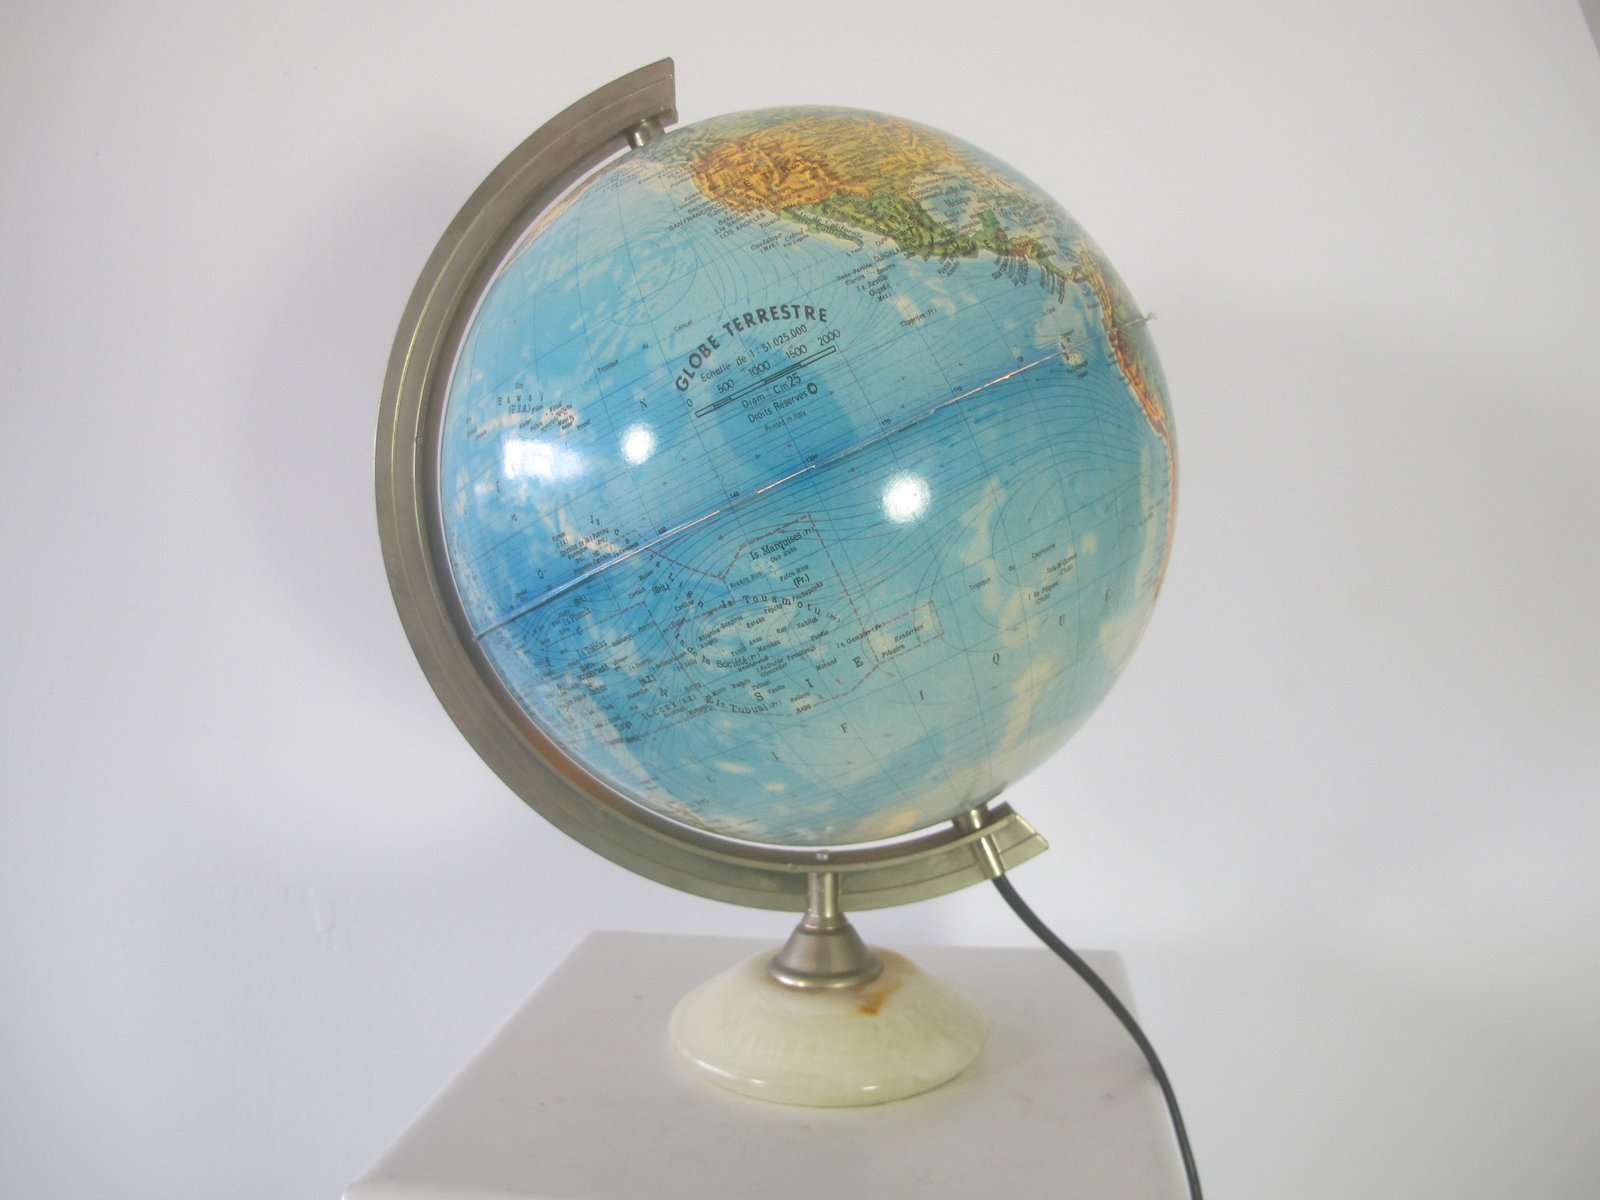 Vintage Lit Globe on Marble Base, 1970s for sale at Pamono